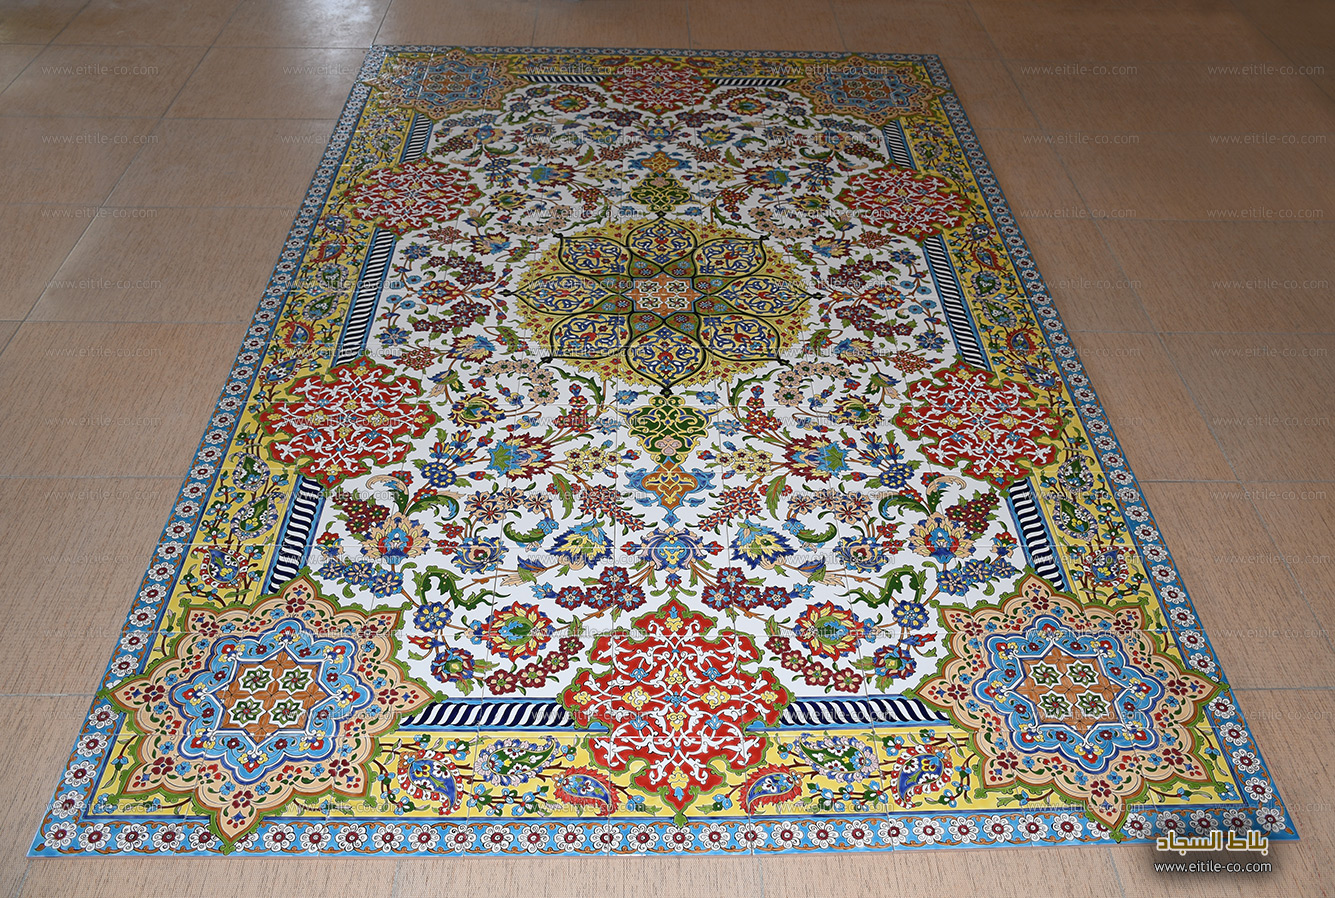 Handmade carpet ceramic tiles for floor decoration, www.eitile.com